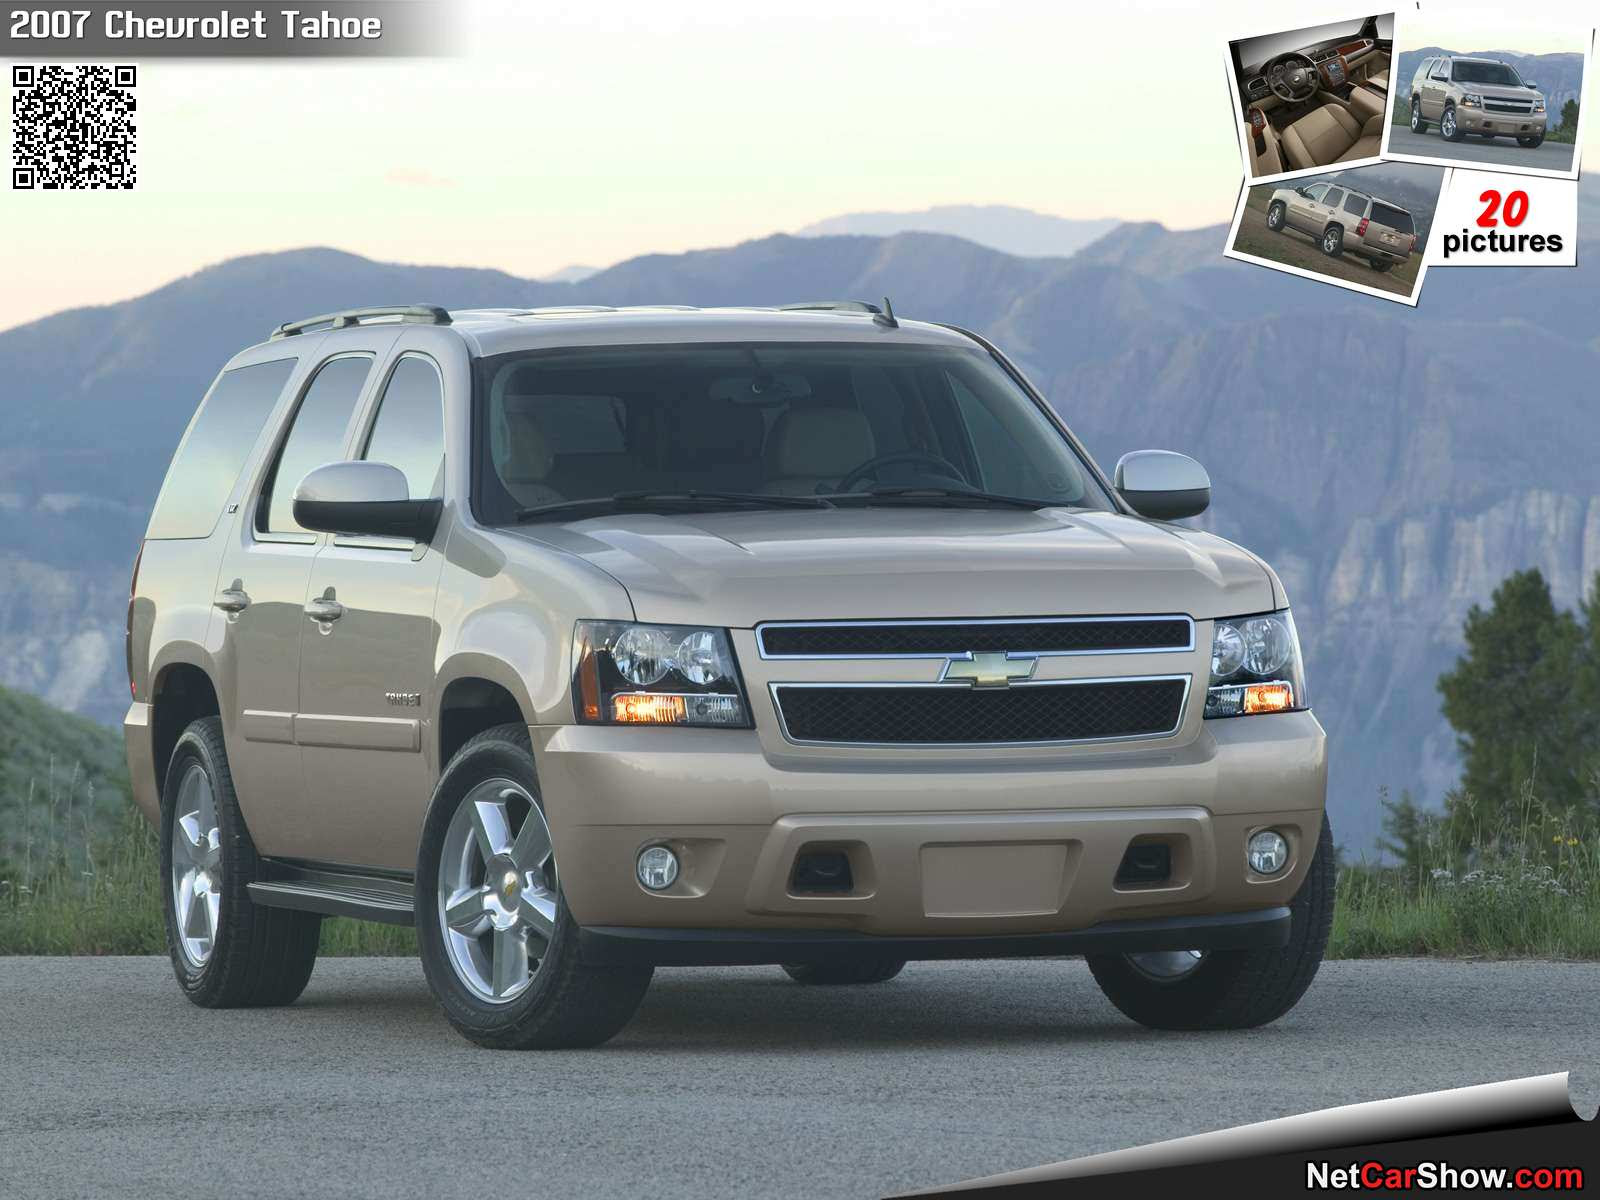 Chevrolet Tahoe 2007 wallpaper